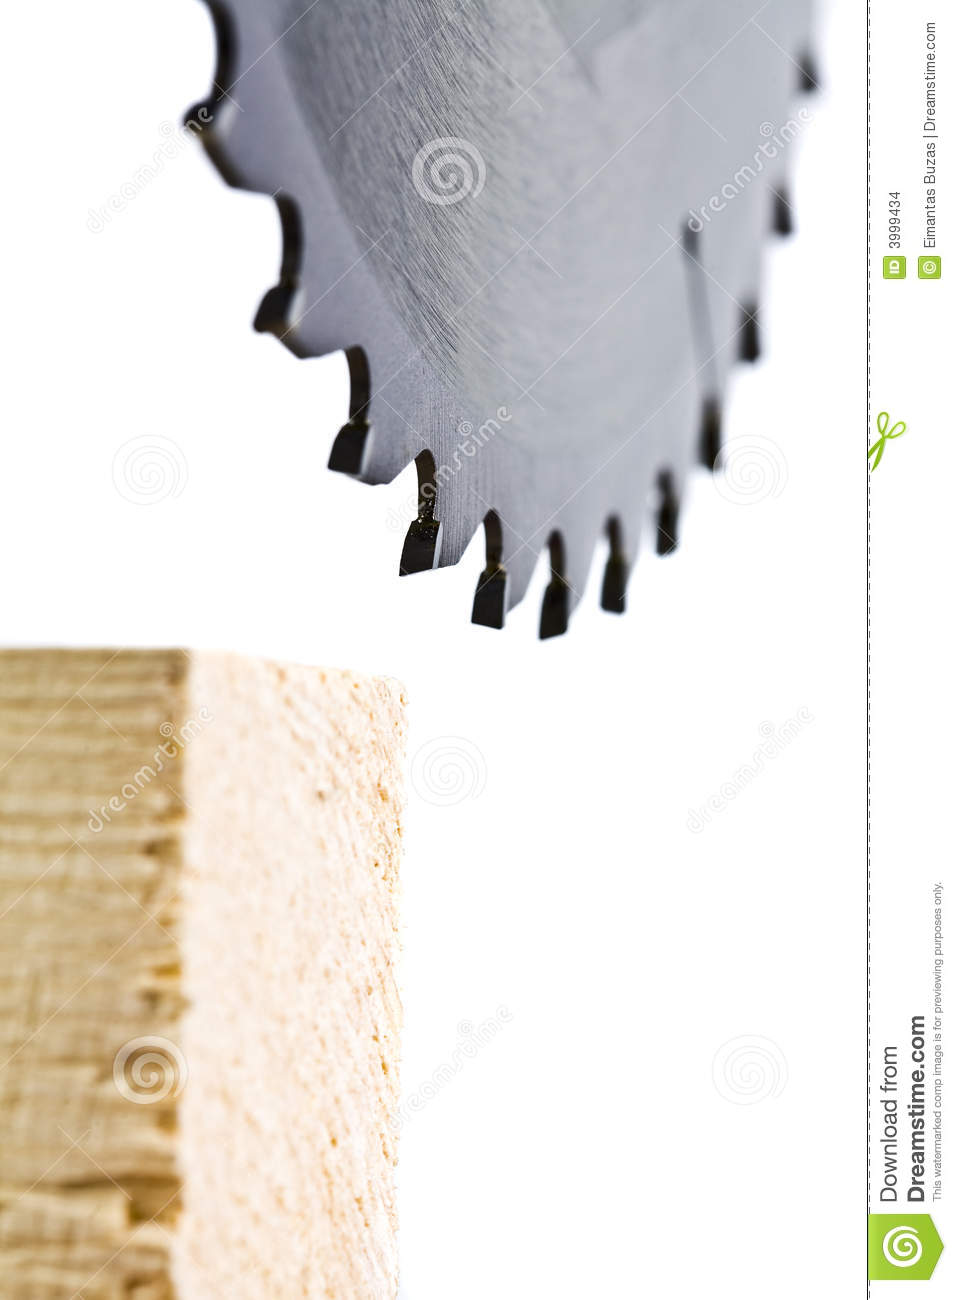 More Similar Stock Images Of   Circular Saw Blade